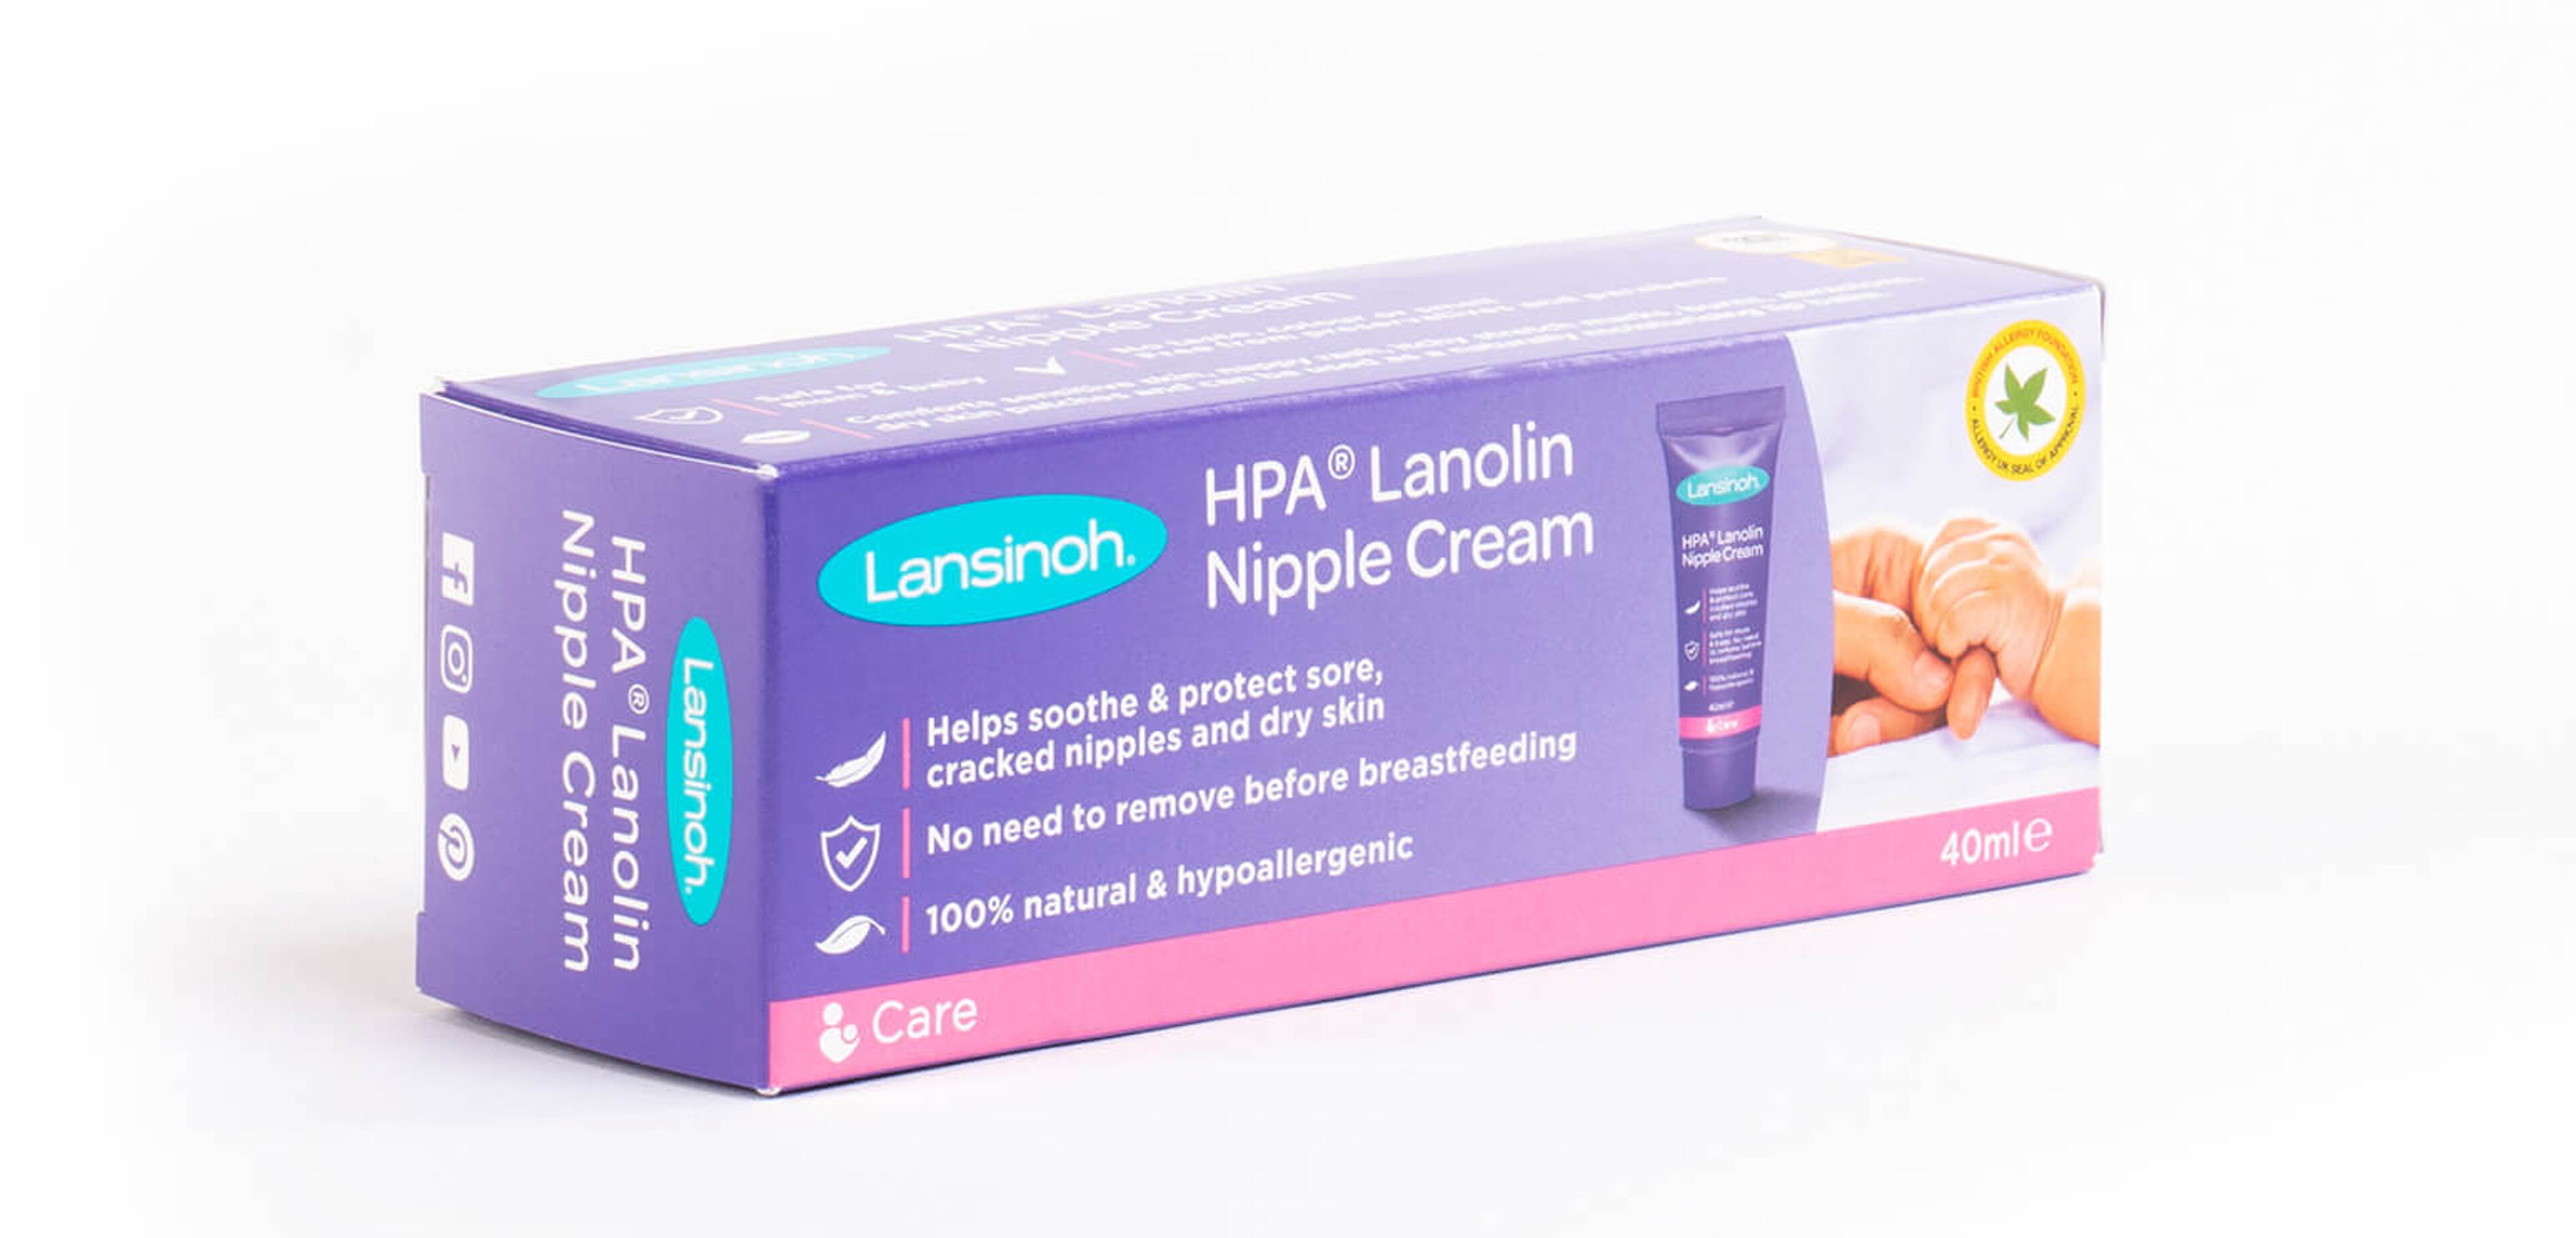 Lansinoh HPA Lanolin Nipple Cream for Sore & Cracked Nipples